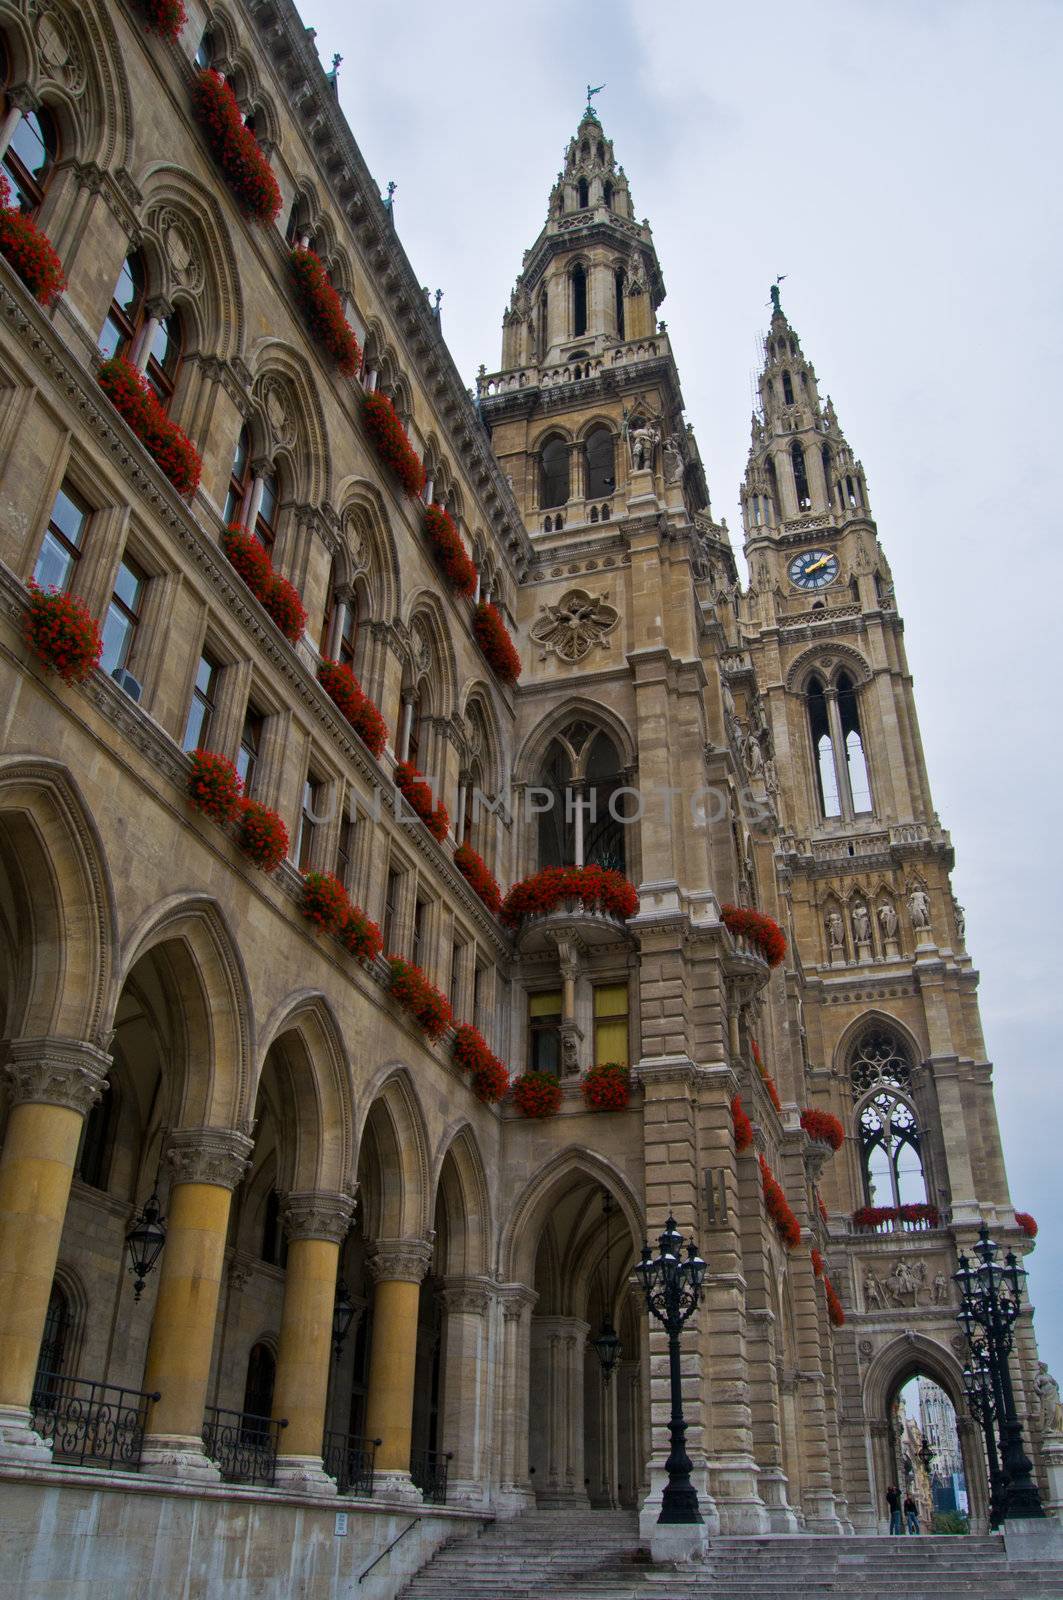 City hall of Vienna by Jule_Berlin